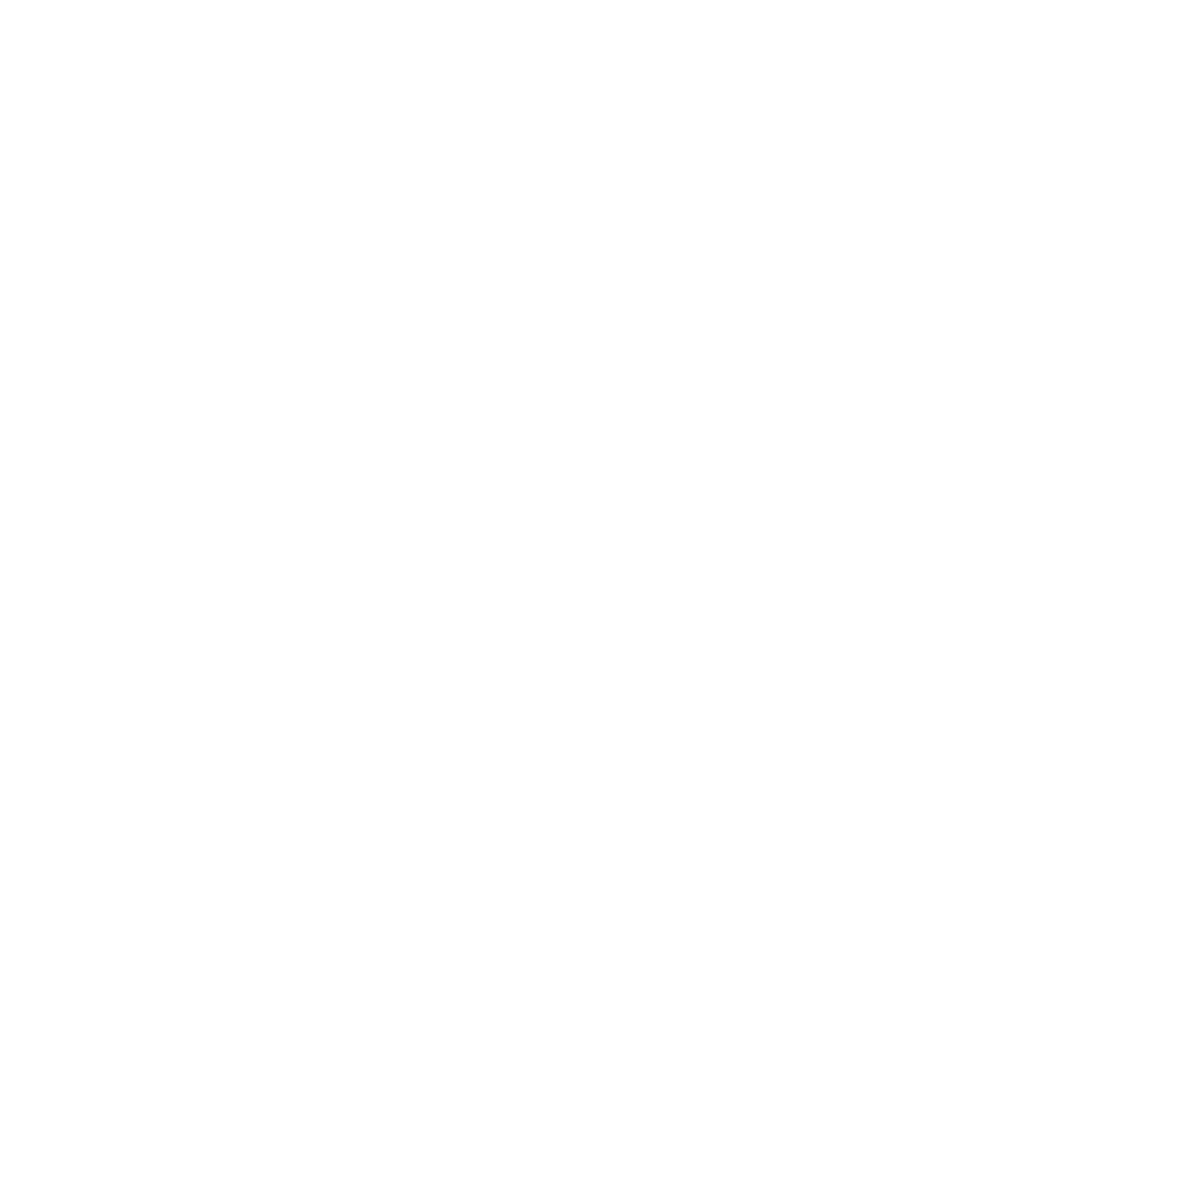 SABF logo WHITE